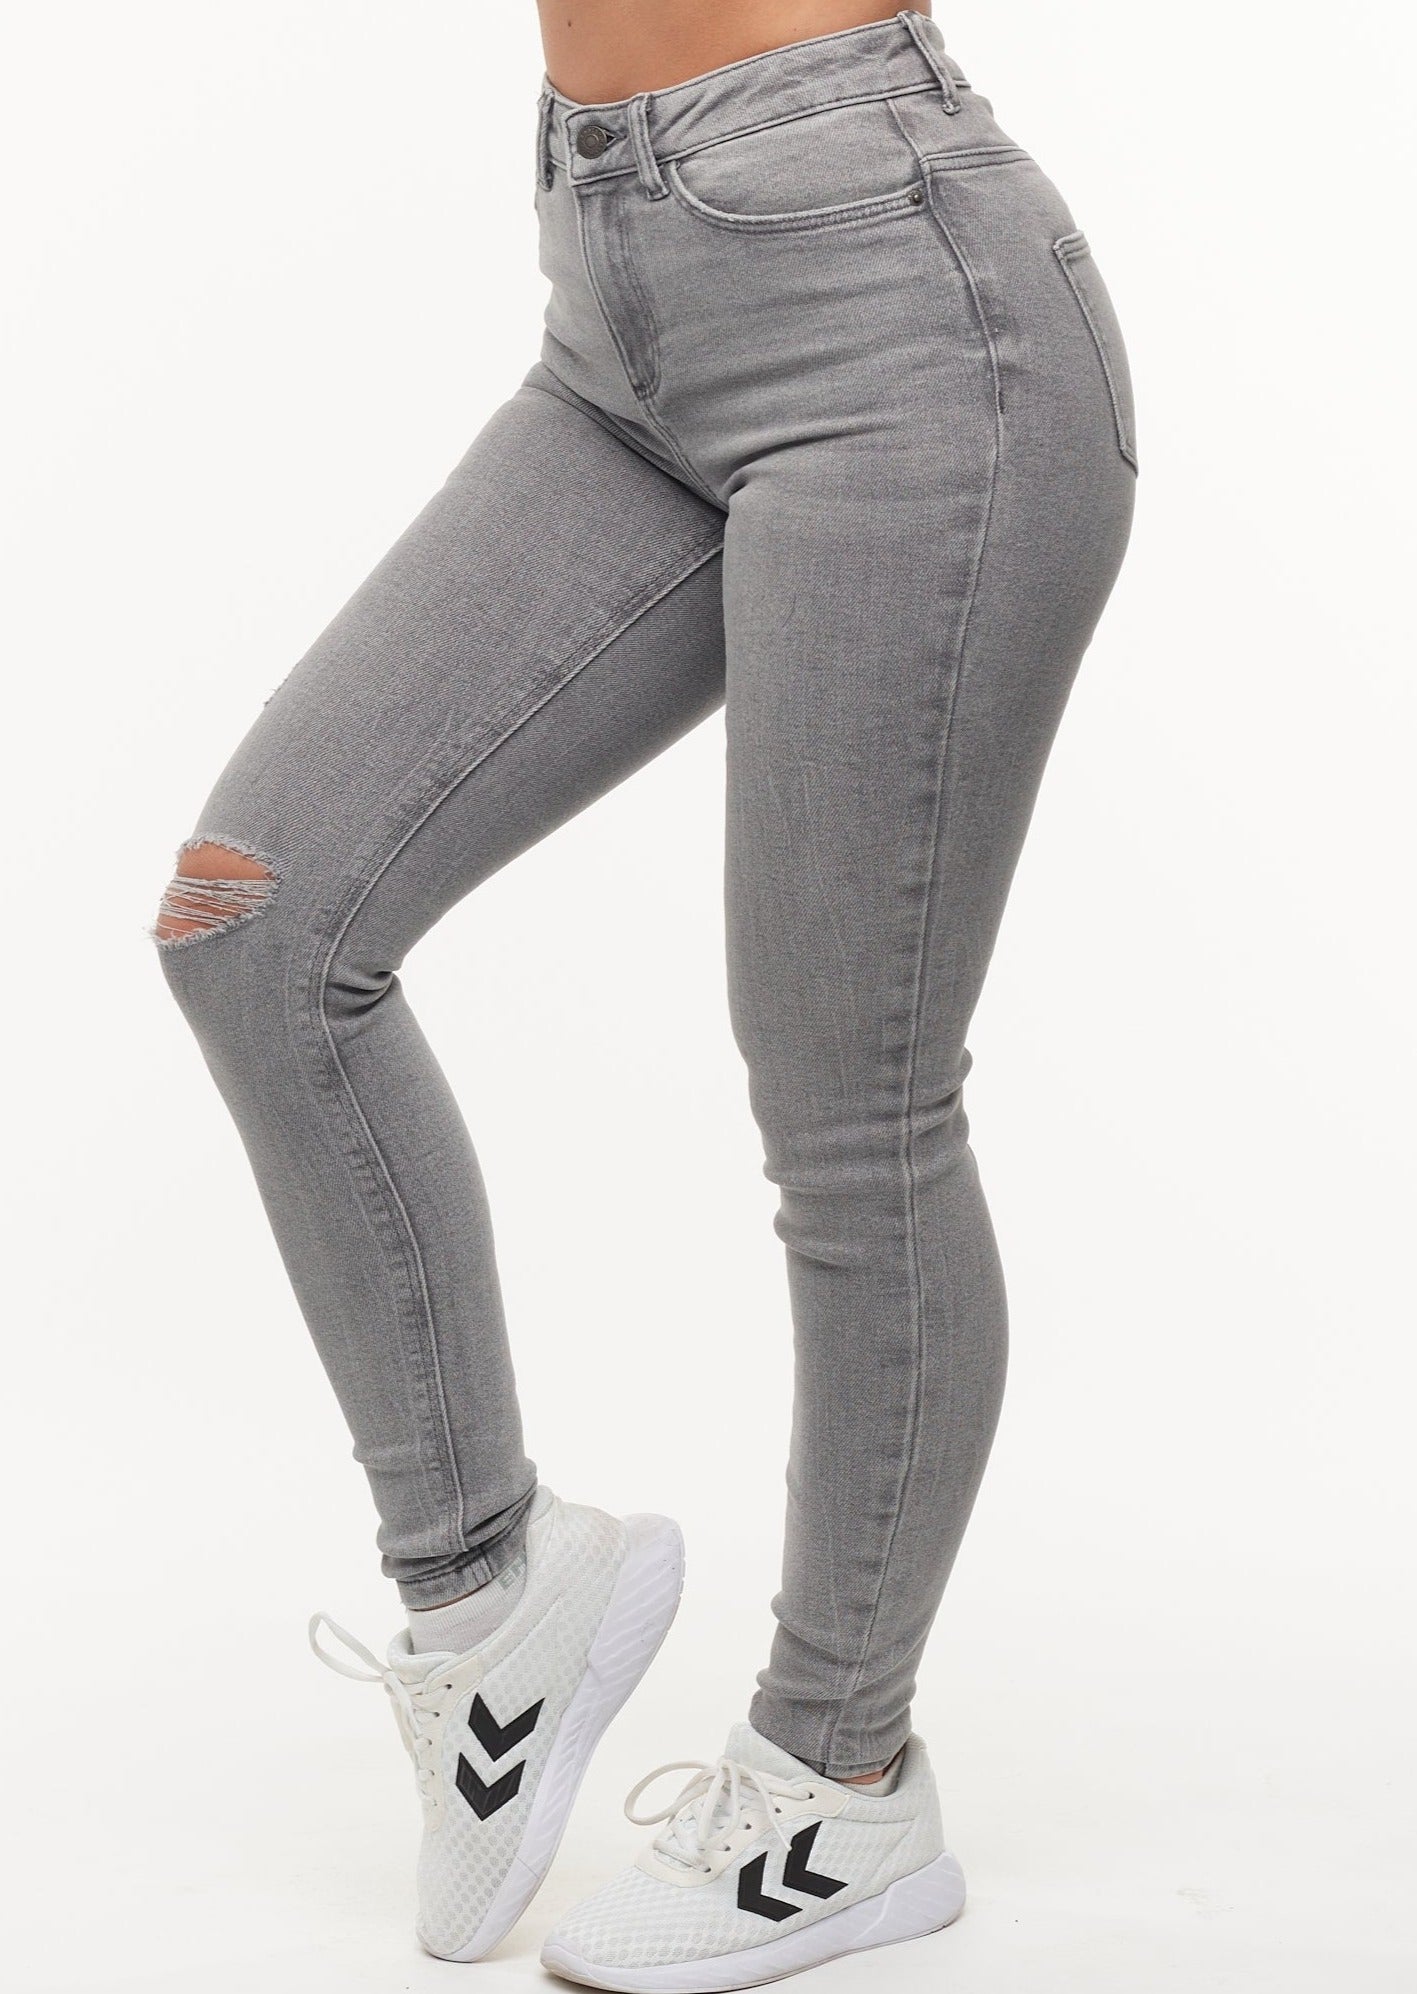 Callie Skinny Jeans - Grey - for kvinde - NOISY MAY - Jeans